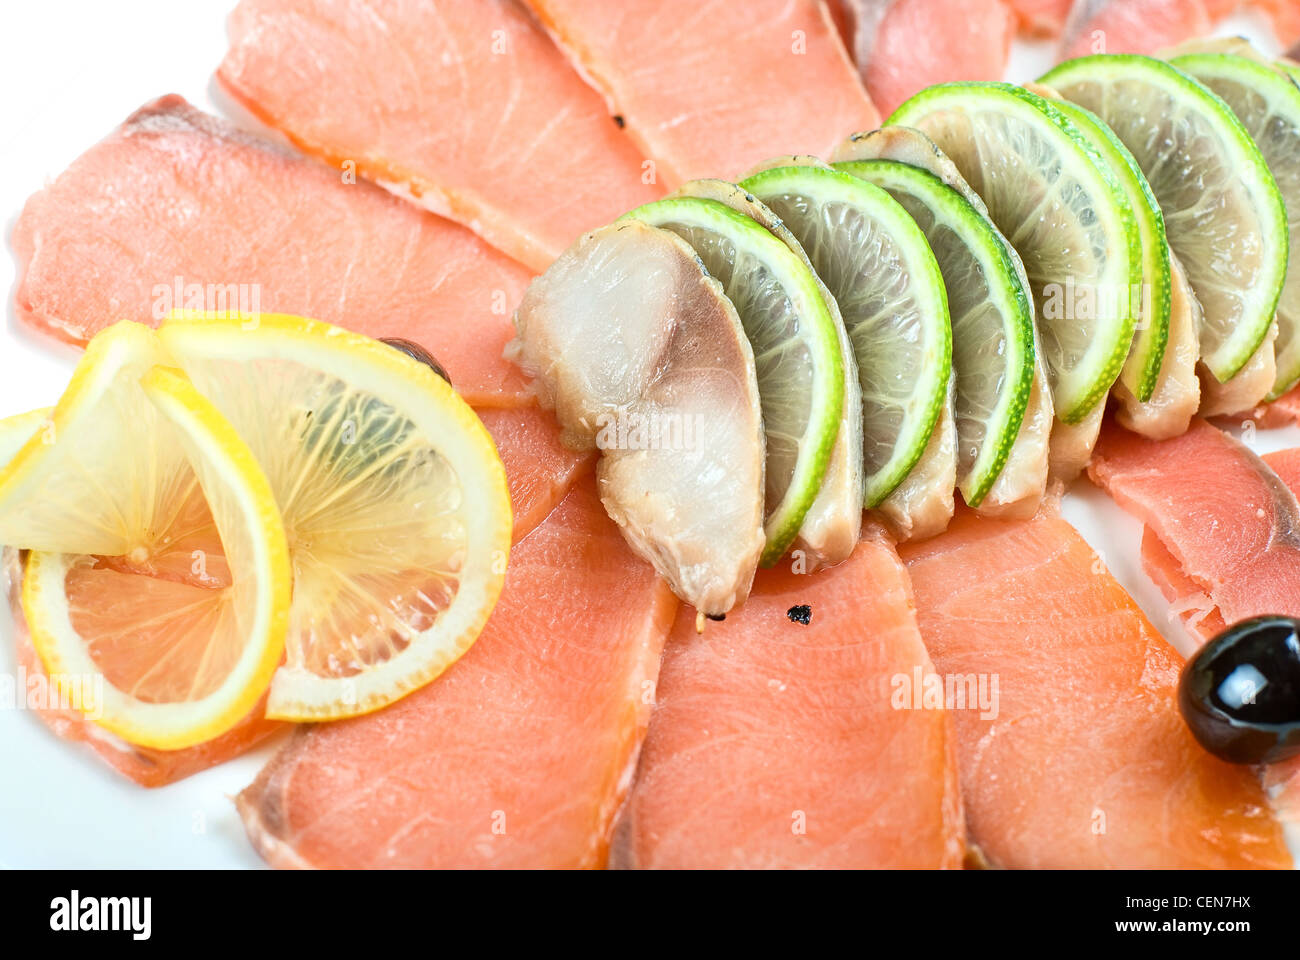 https://c8.alamy.com/comp/CEN7HX/sliced-chum-salmon-and-mackerel-closeup-decorated-with-limes-lemons-CEN7HX.jpg